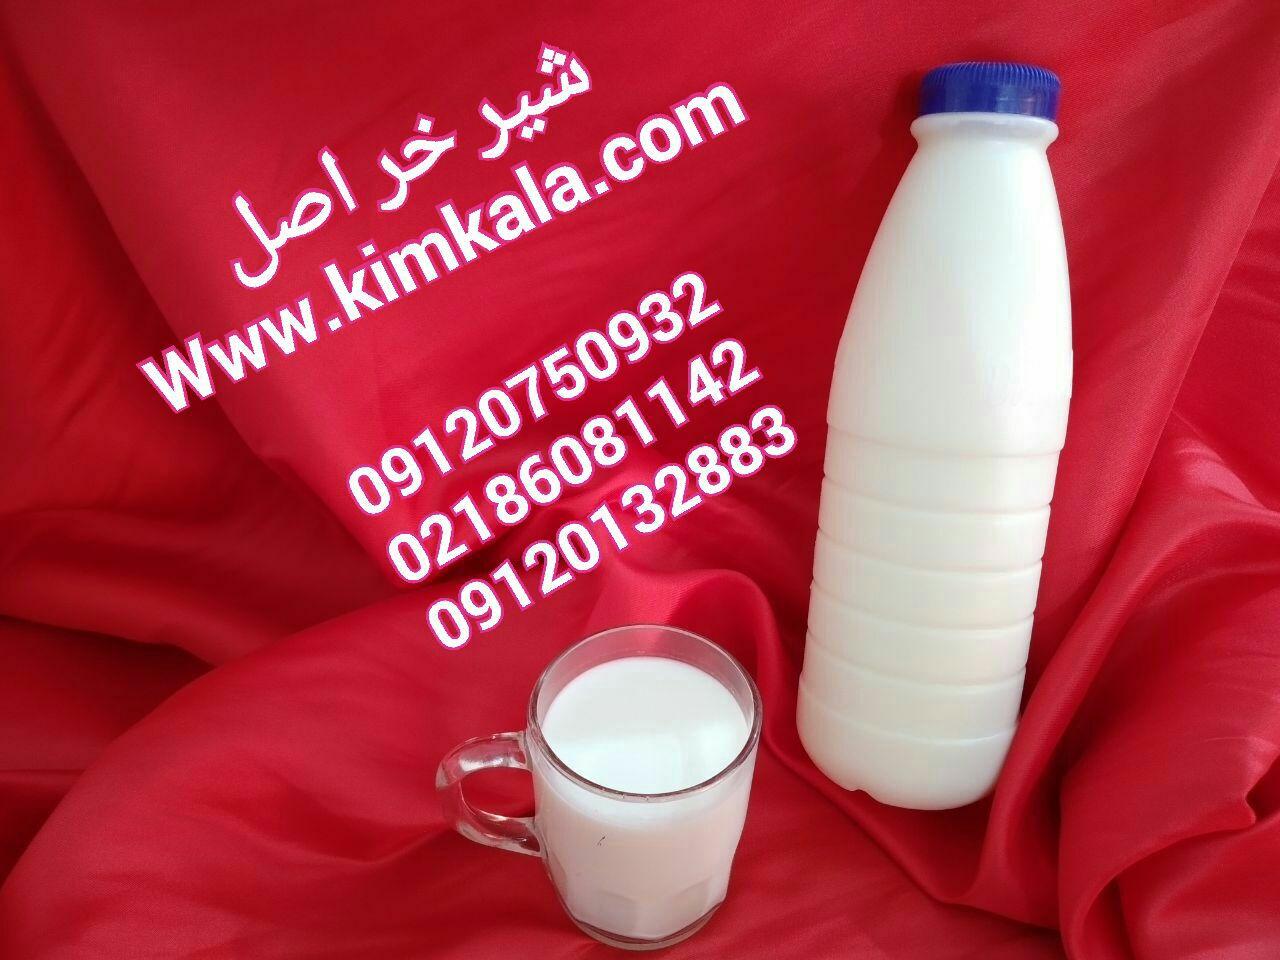 فواید شیر الاغ | 09120132883 |  شیر خر  بهداشتی 